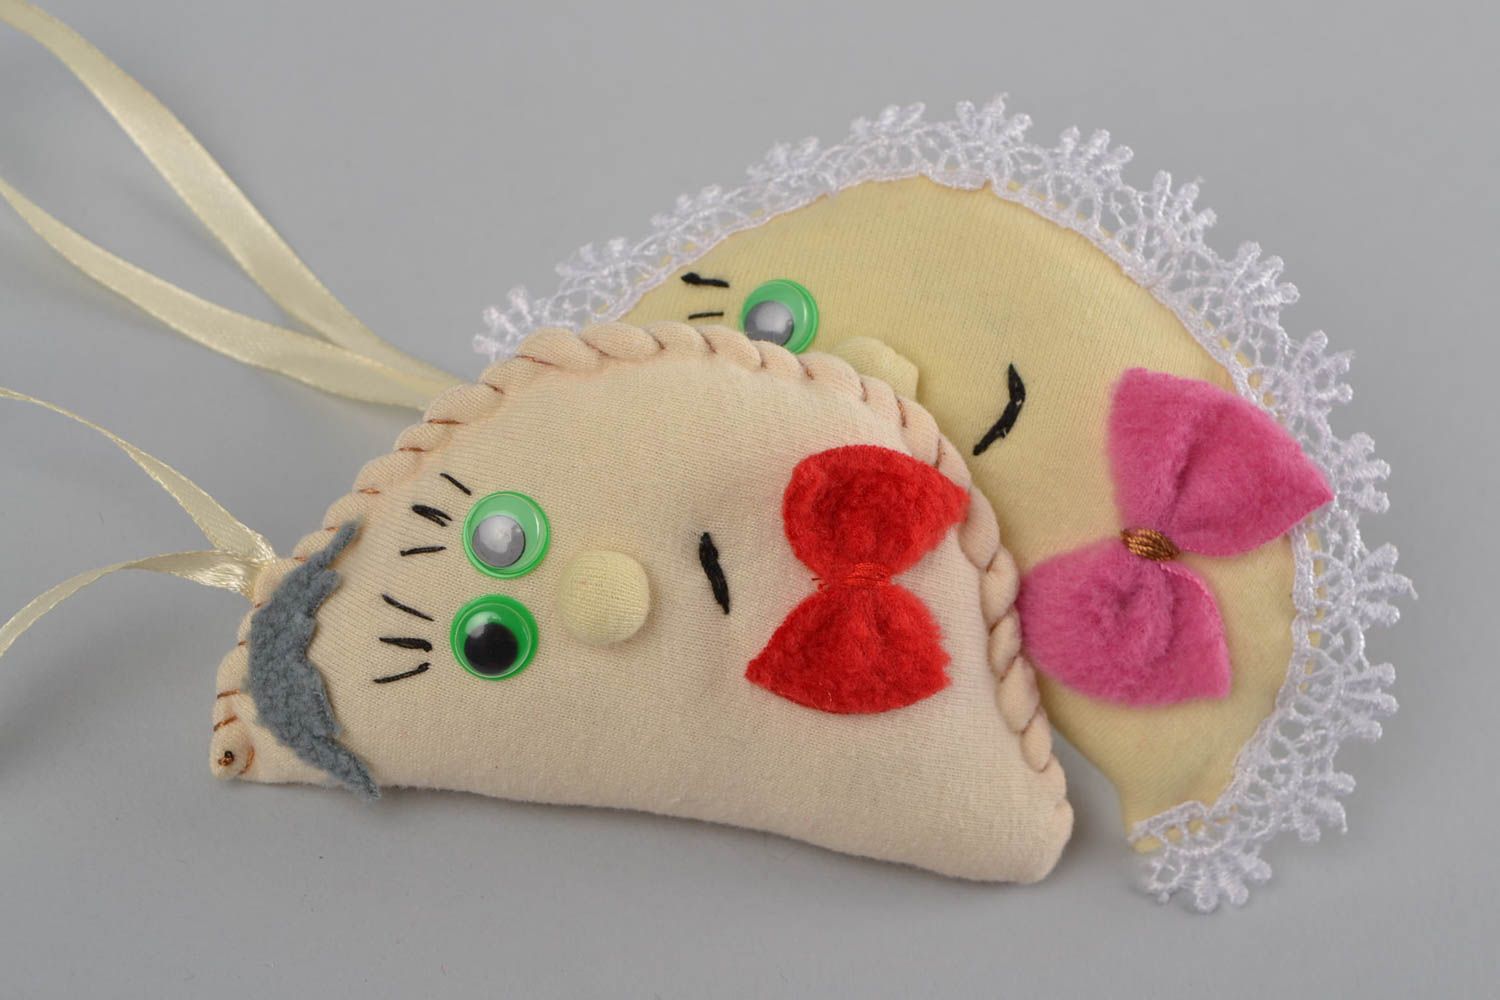 Handmade soft toy varenyk with eyelet mafe of fleece interior wall hanger photo 1